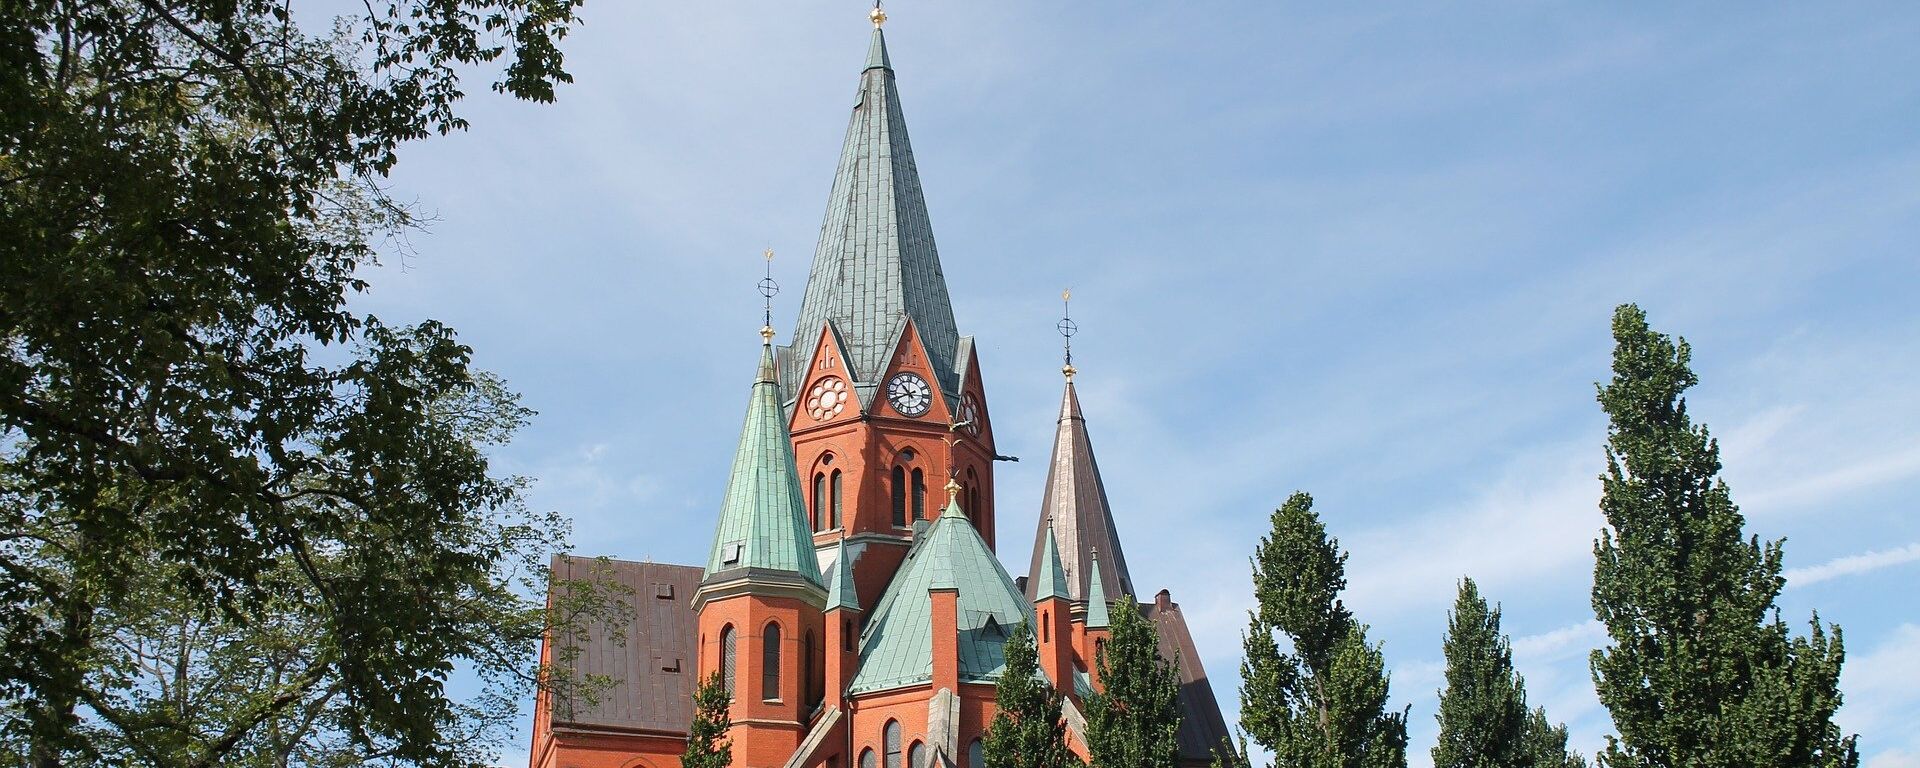 Church in Sweden - Sputnik International, 1920, 02.09.2021